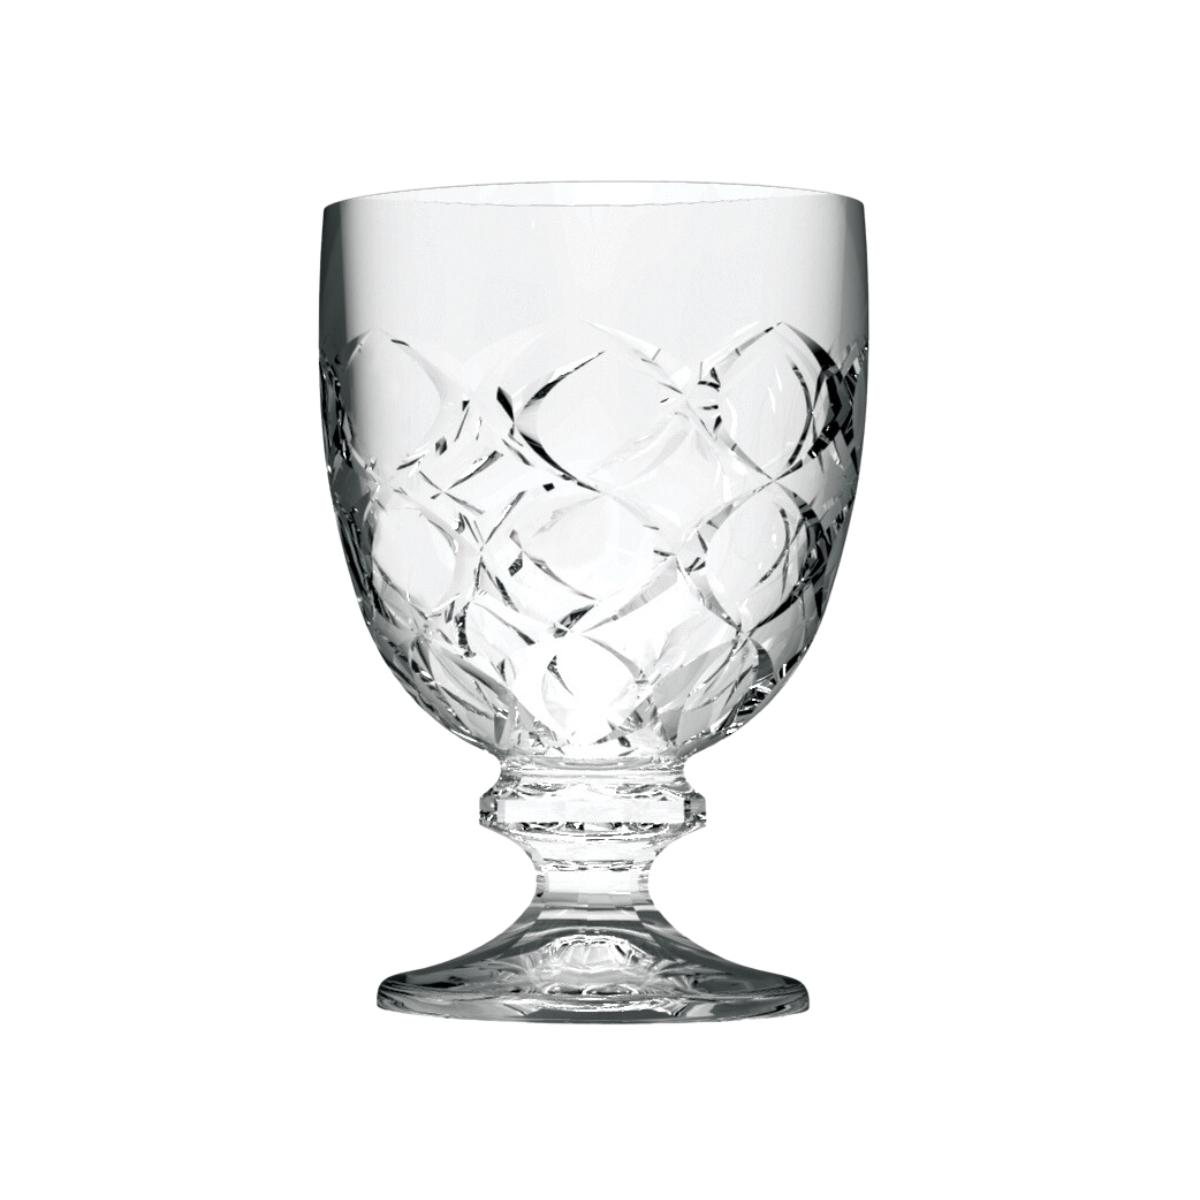 طقم كسات عصير شفاف مصري سيتي كلاس لوكارنو City glass Locarno Stemware 220 ml set of 6 piece